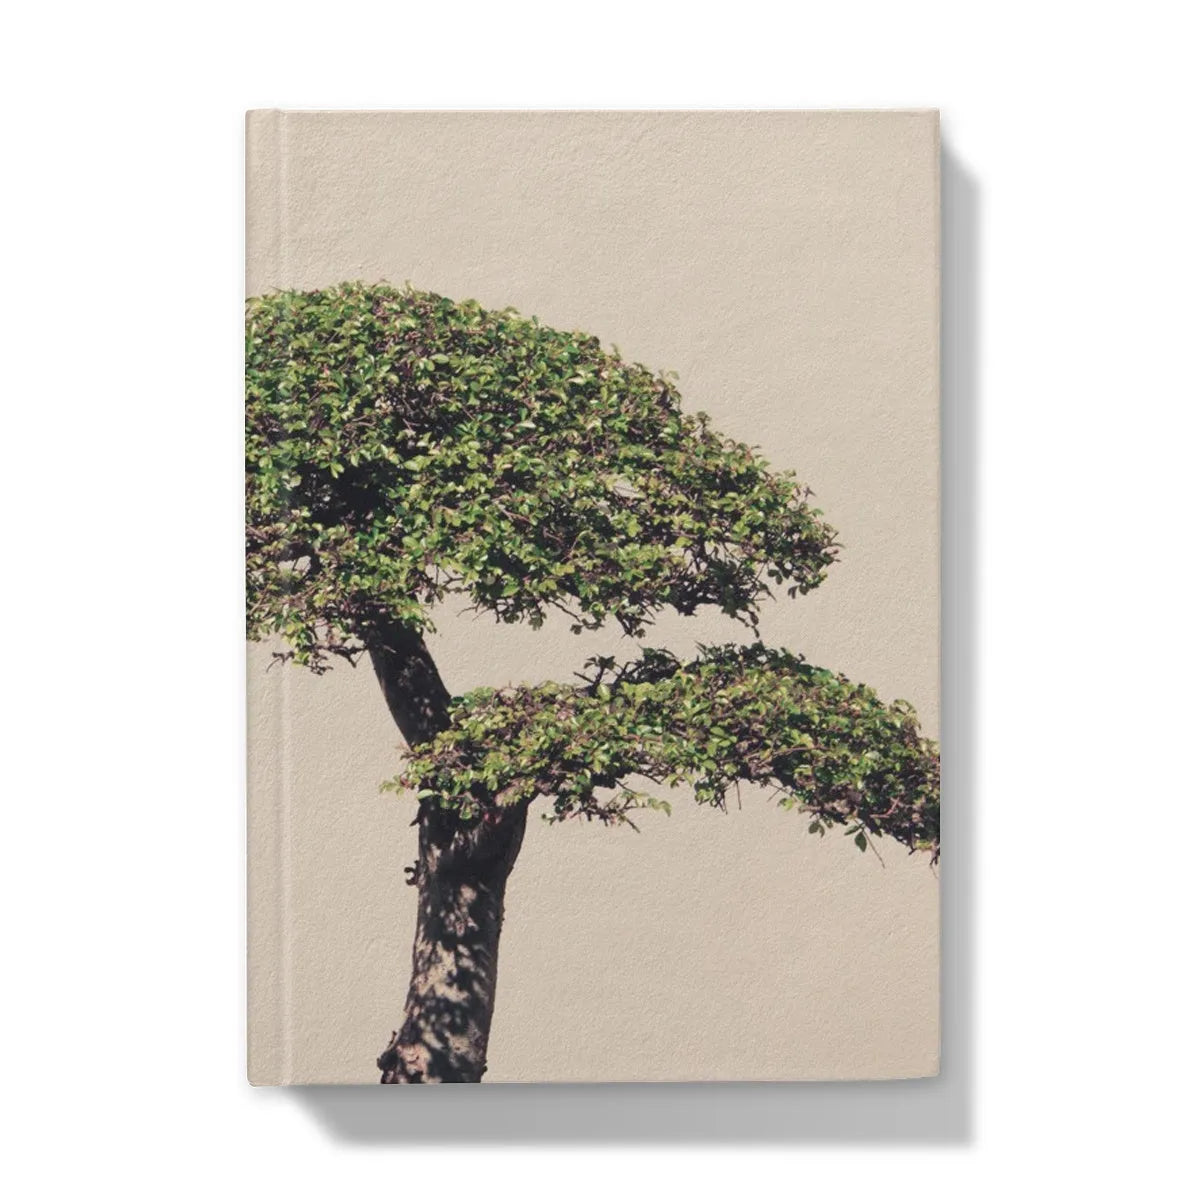 Me Myself And Bonsai Hardback Journal - 5’x7’ / 5’ x 7’ - Plain Paper - Notebooks & Notepads - Aesthetic Art